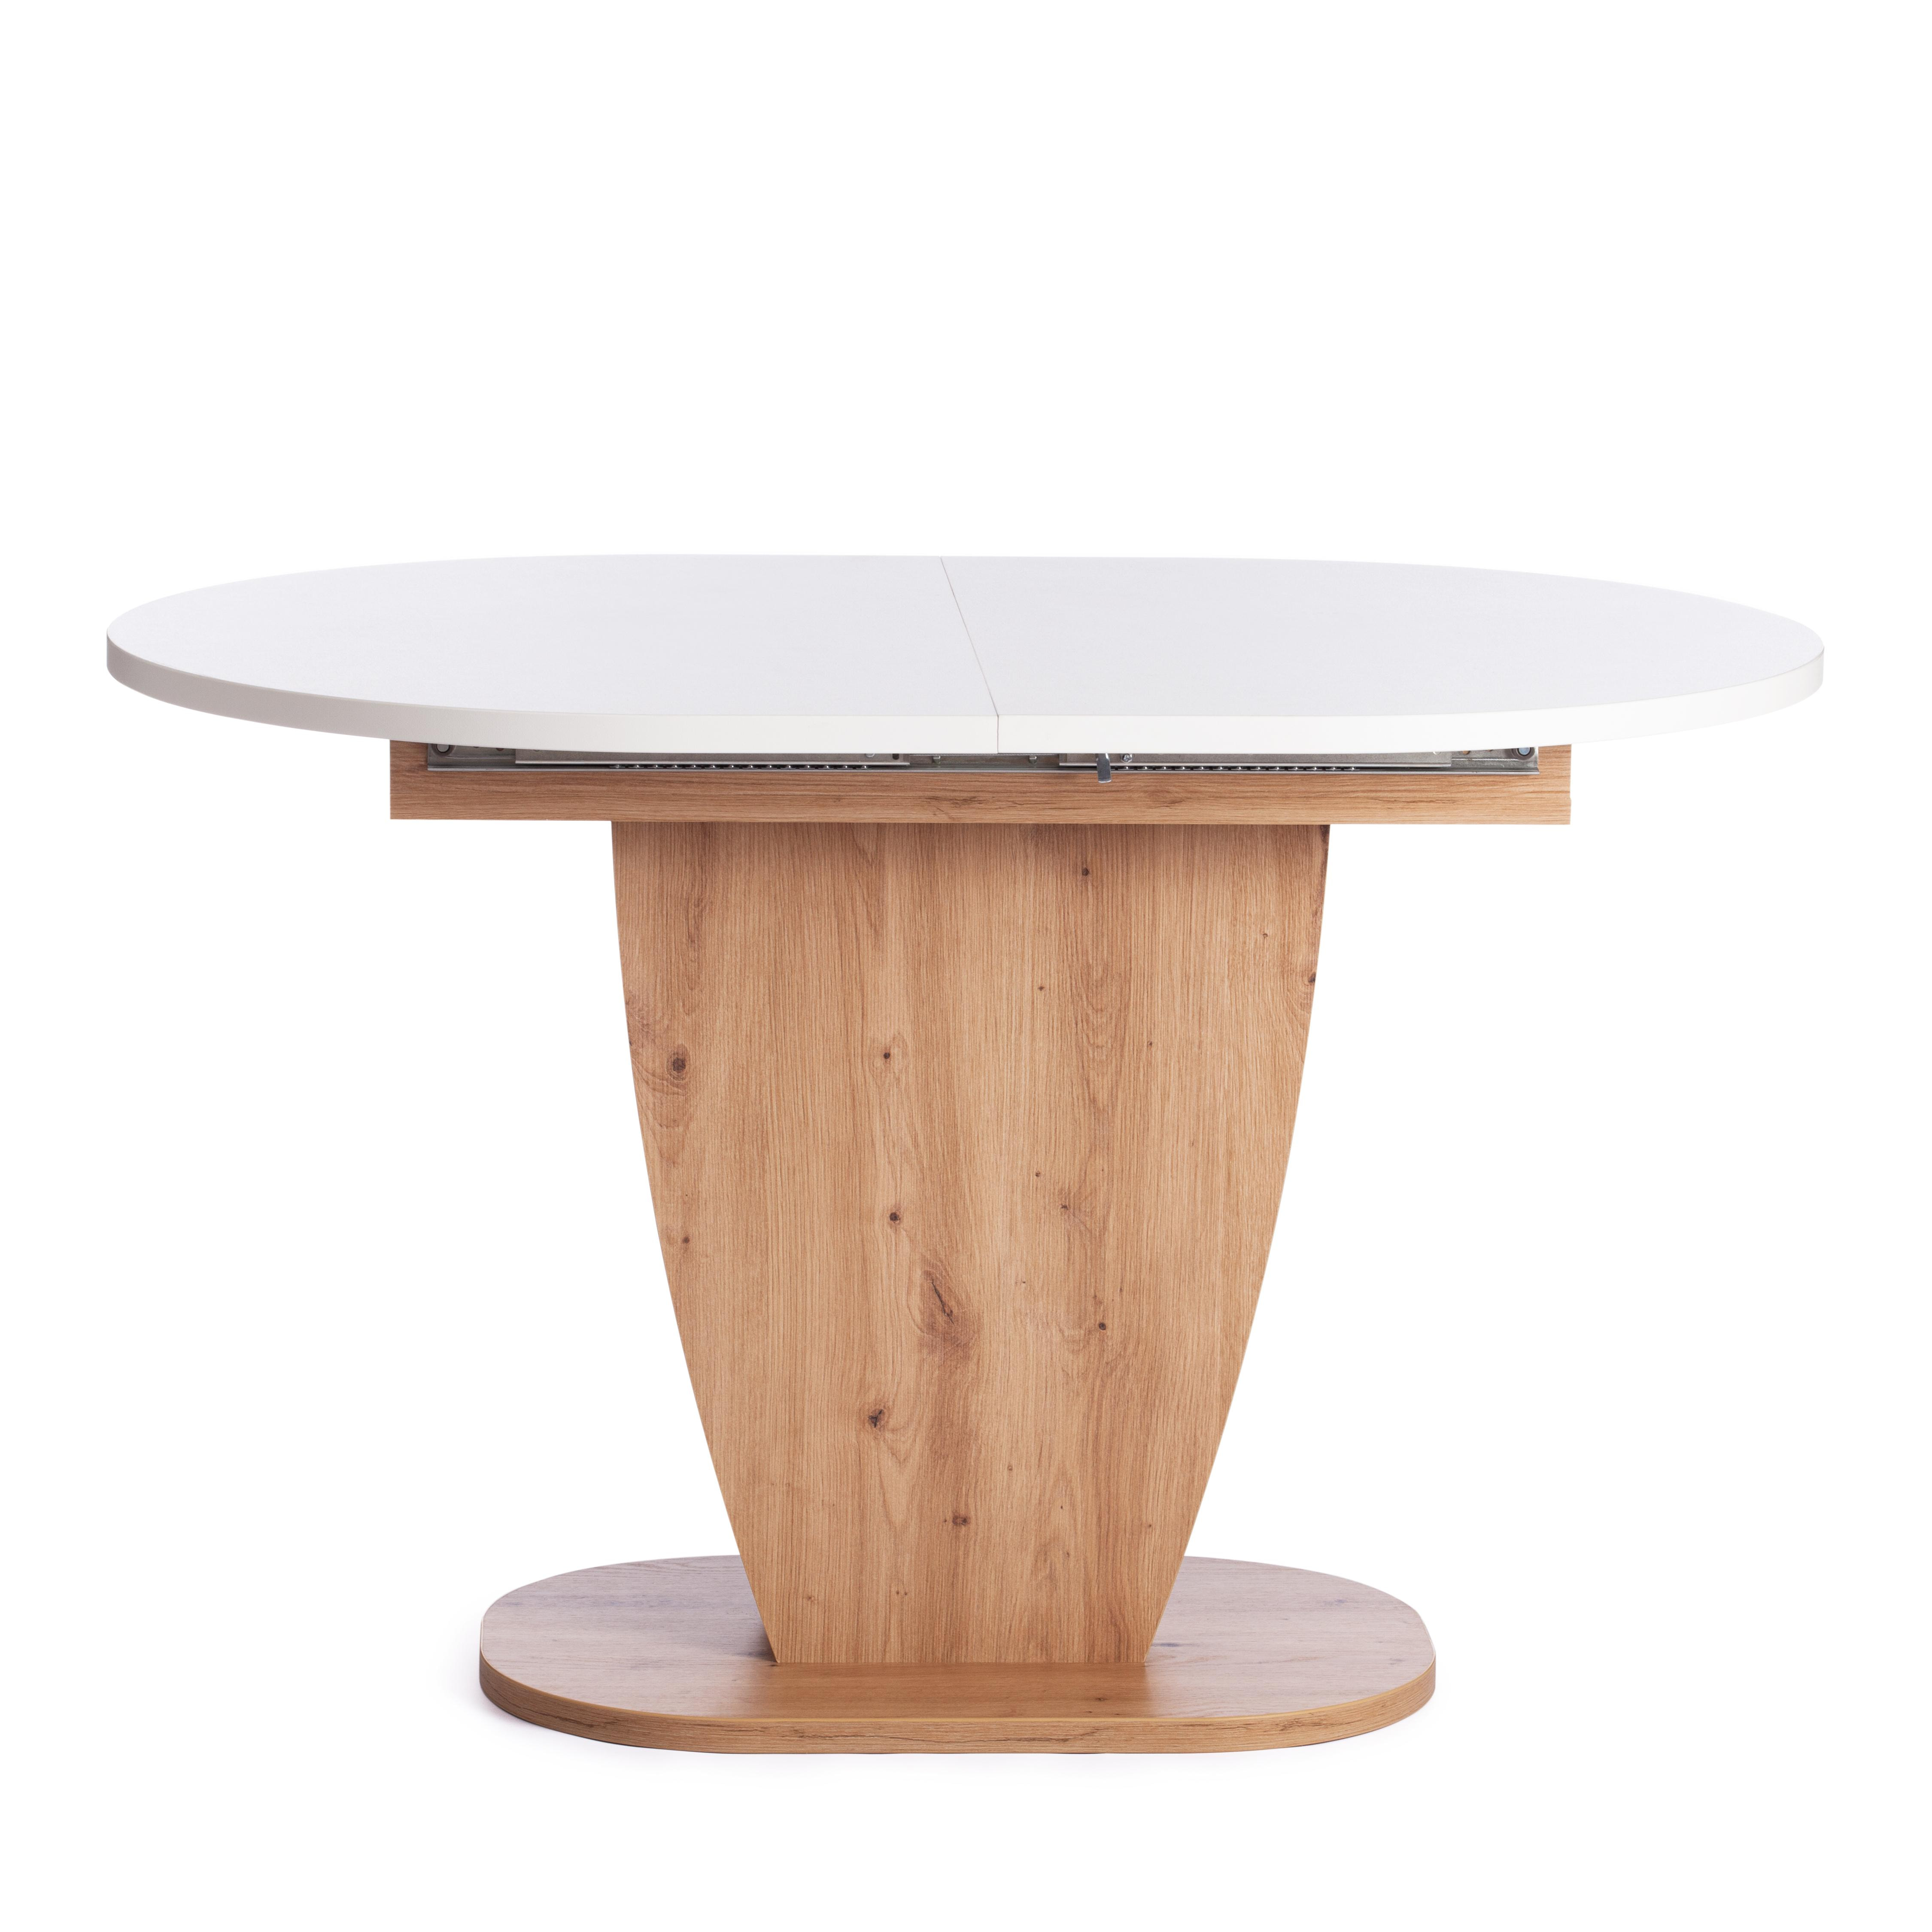 Стол обеденный SATURN ЛДСП, 120-160x80x75,5 см, Дуб Артисан/Белый